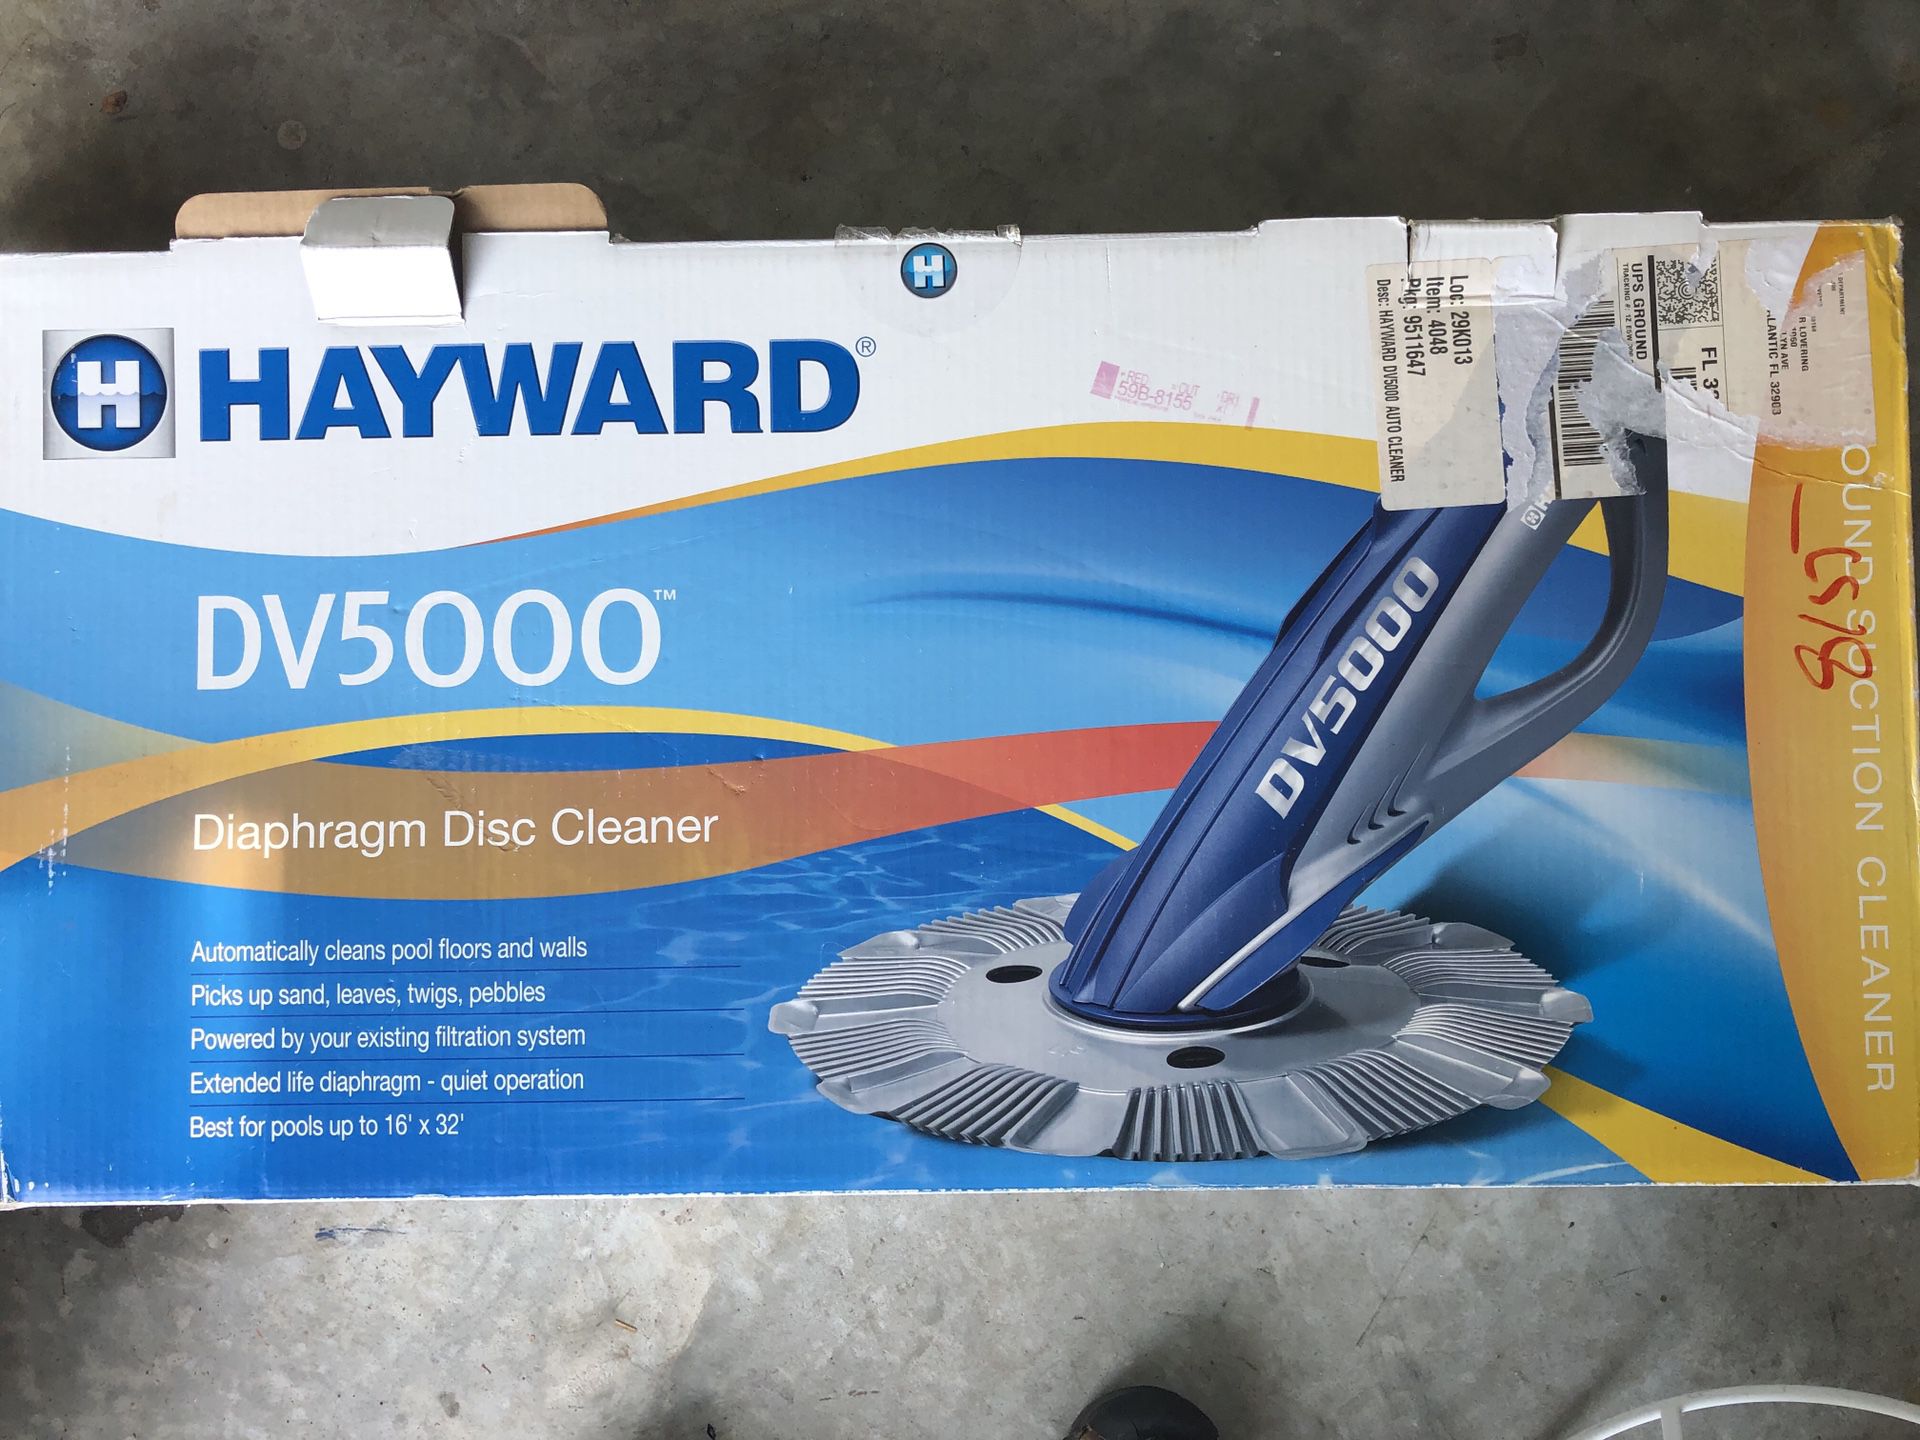 Hayward DV5000 Suction Pool Cleaner.